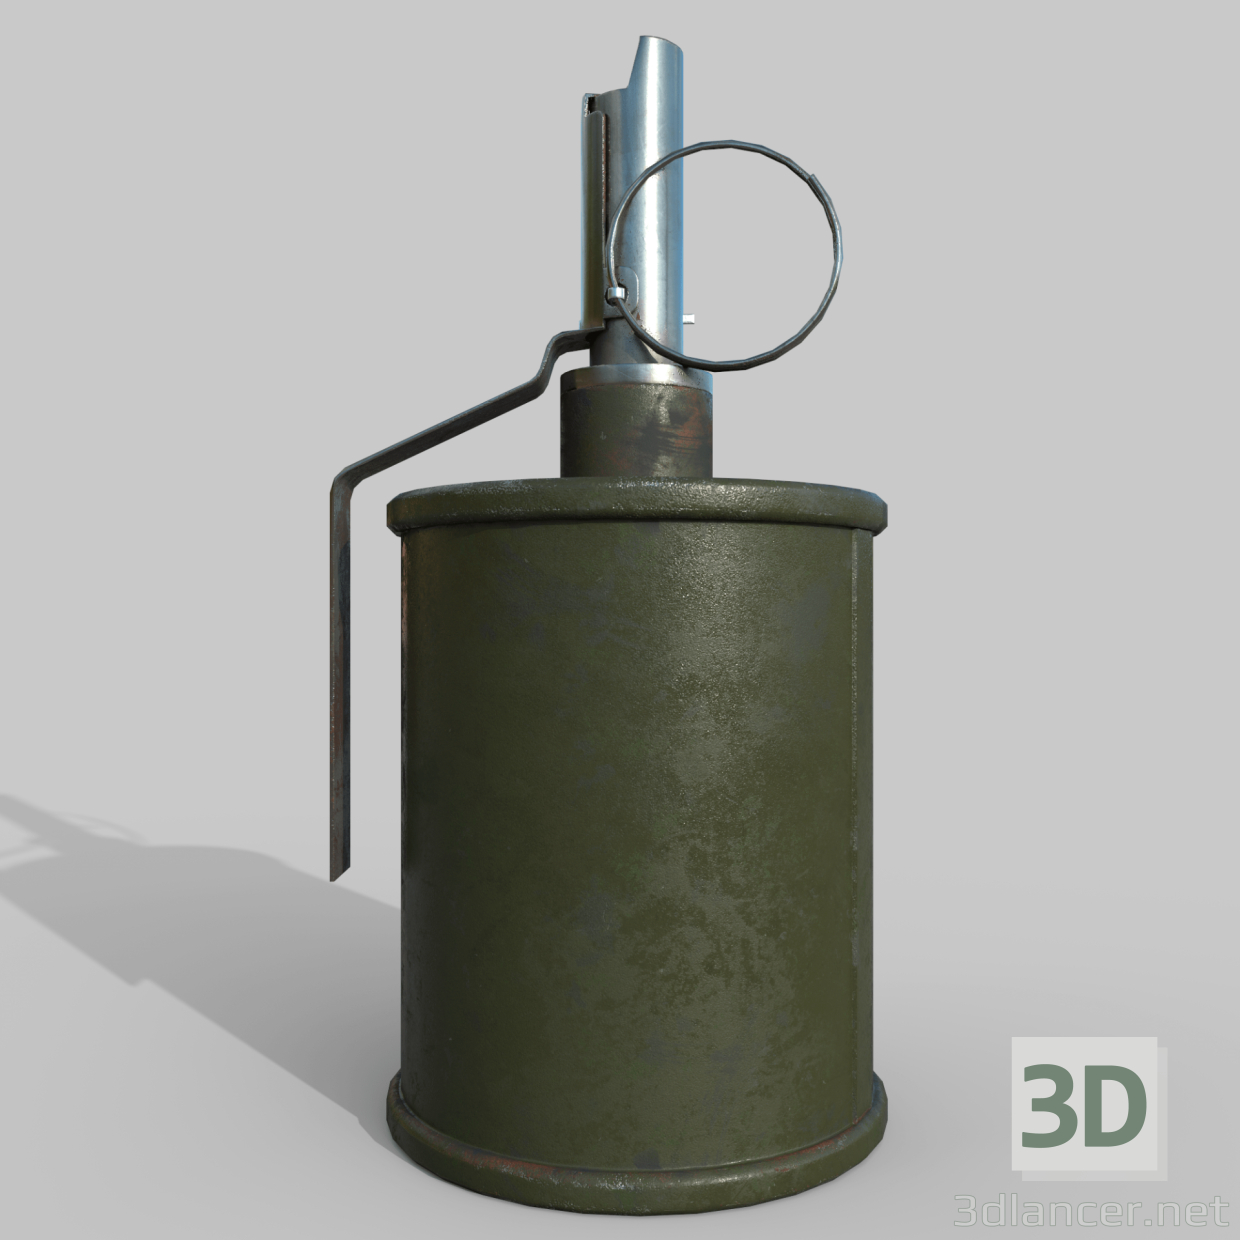 modèle 3D de Grenade RG-42 acheter - rendu